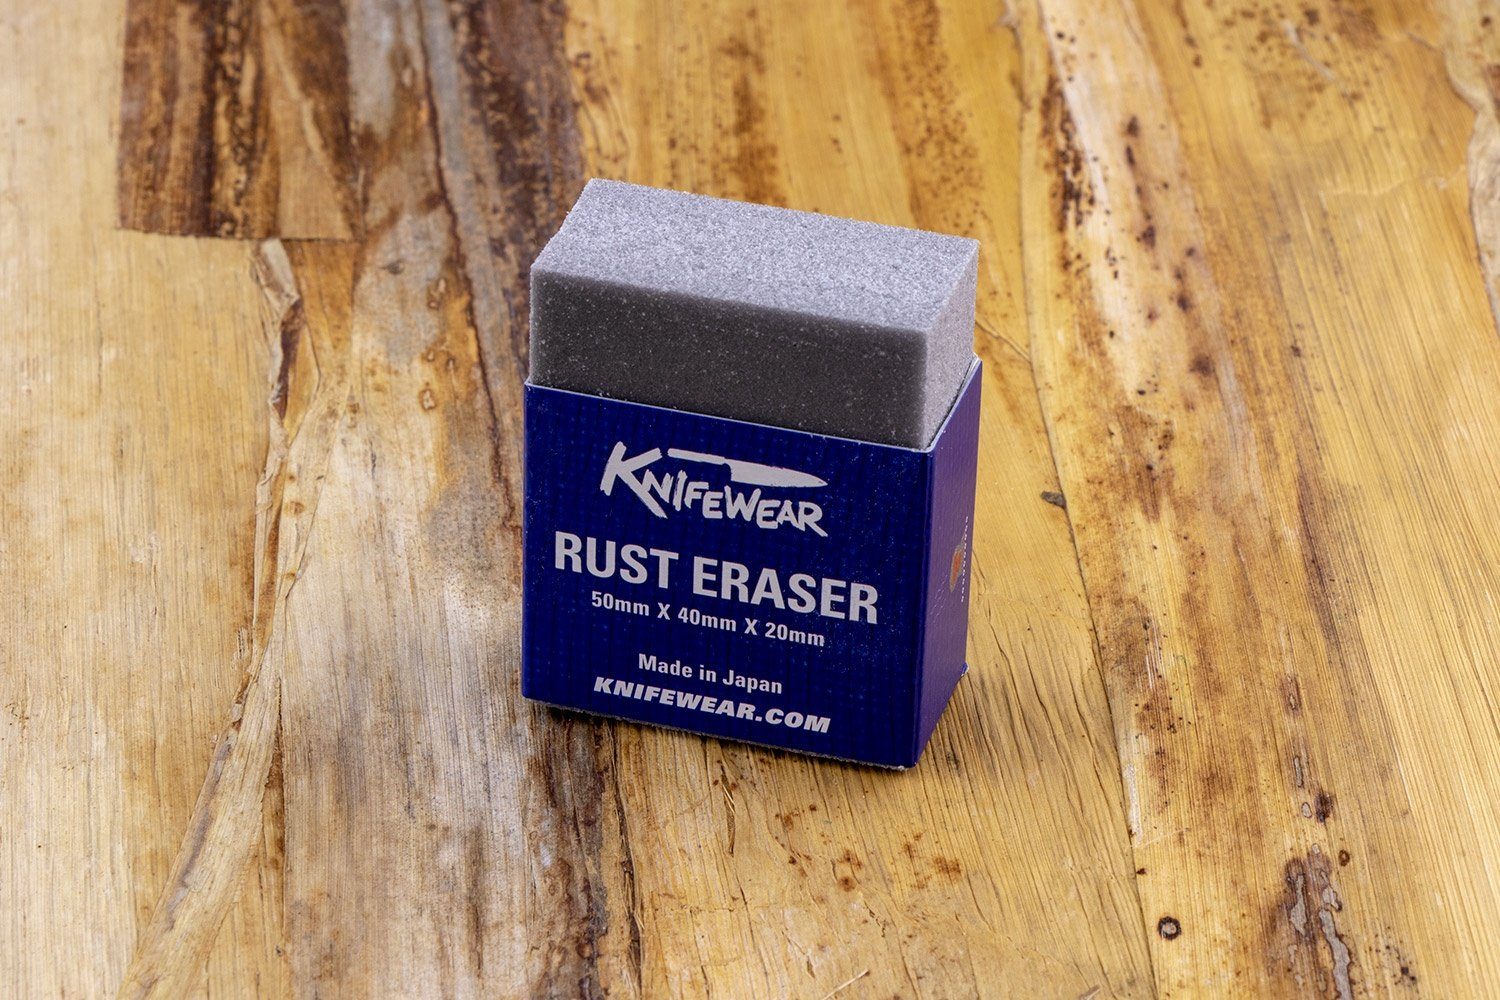 Knifewear Rust Eraser from Knifewear